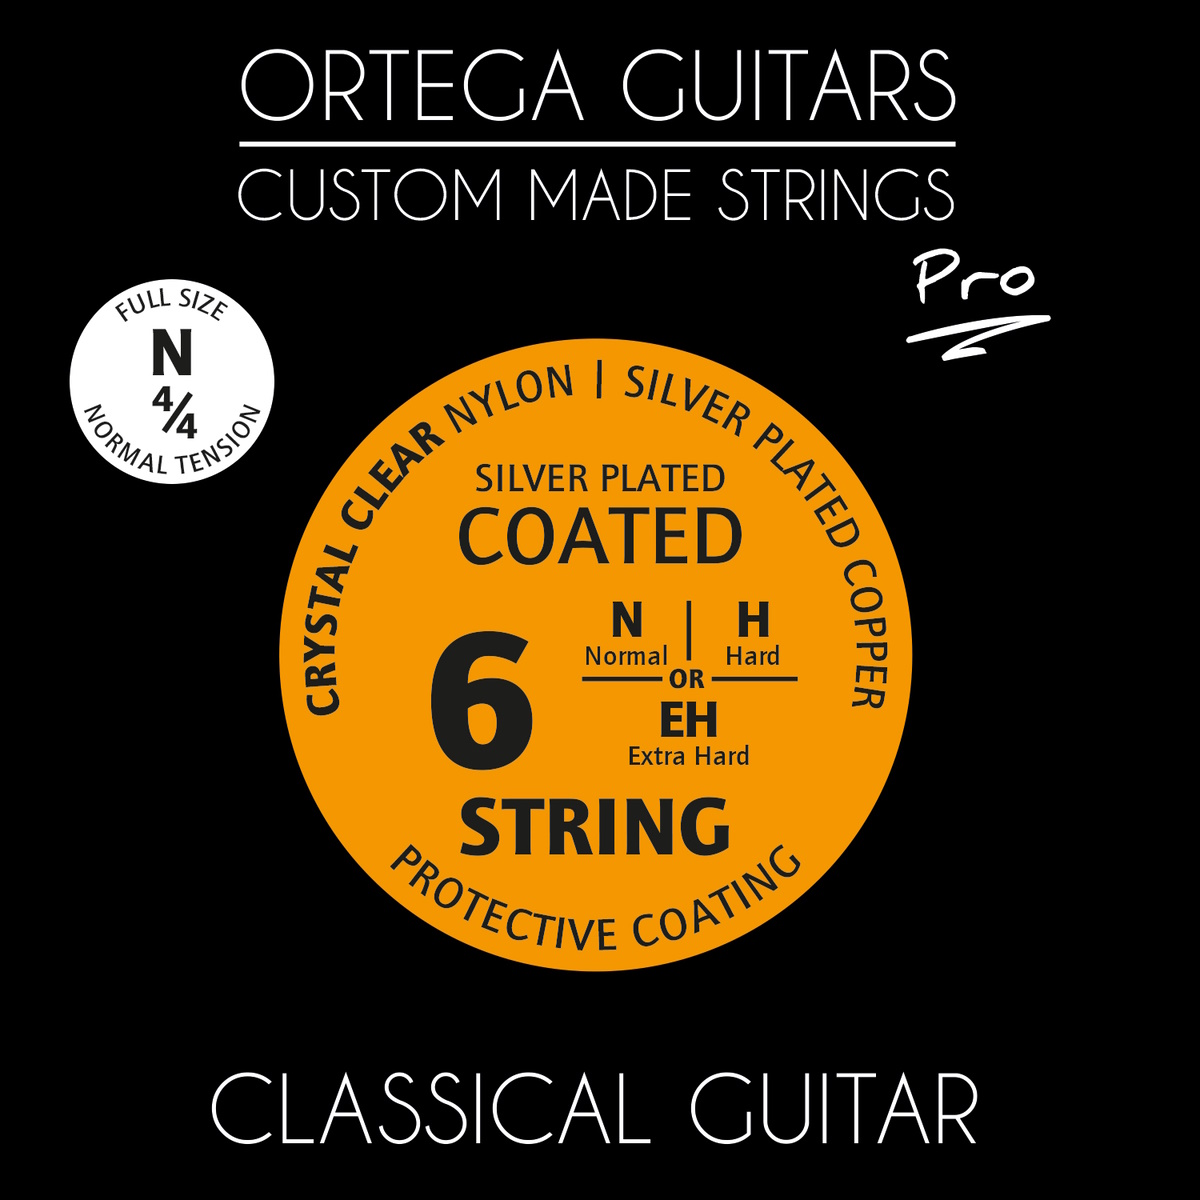 Ortega NYP44N Custom Made "Pro" Saiten für Klassikgitarre